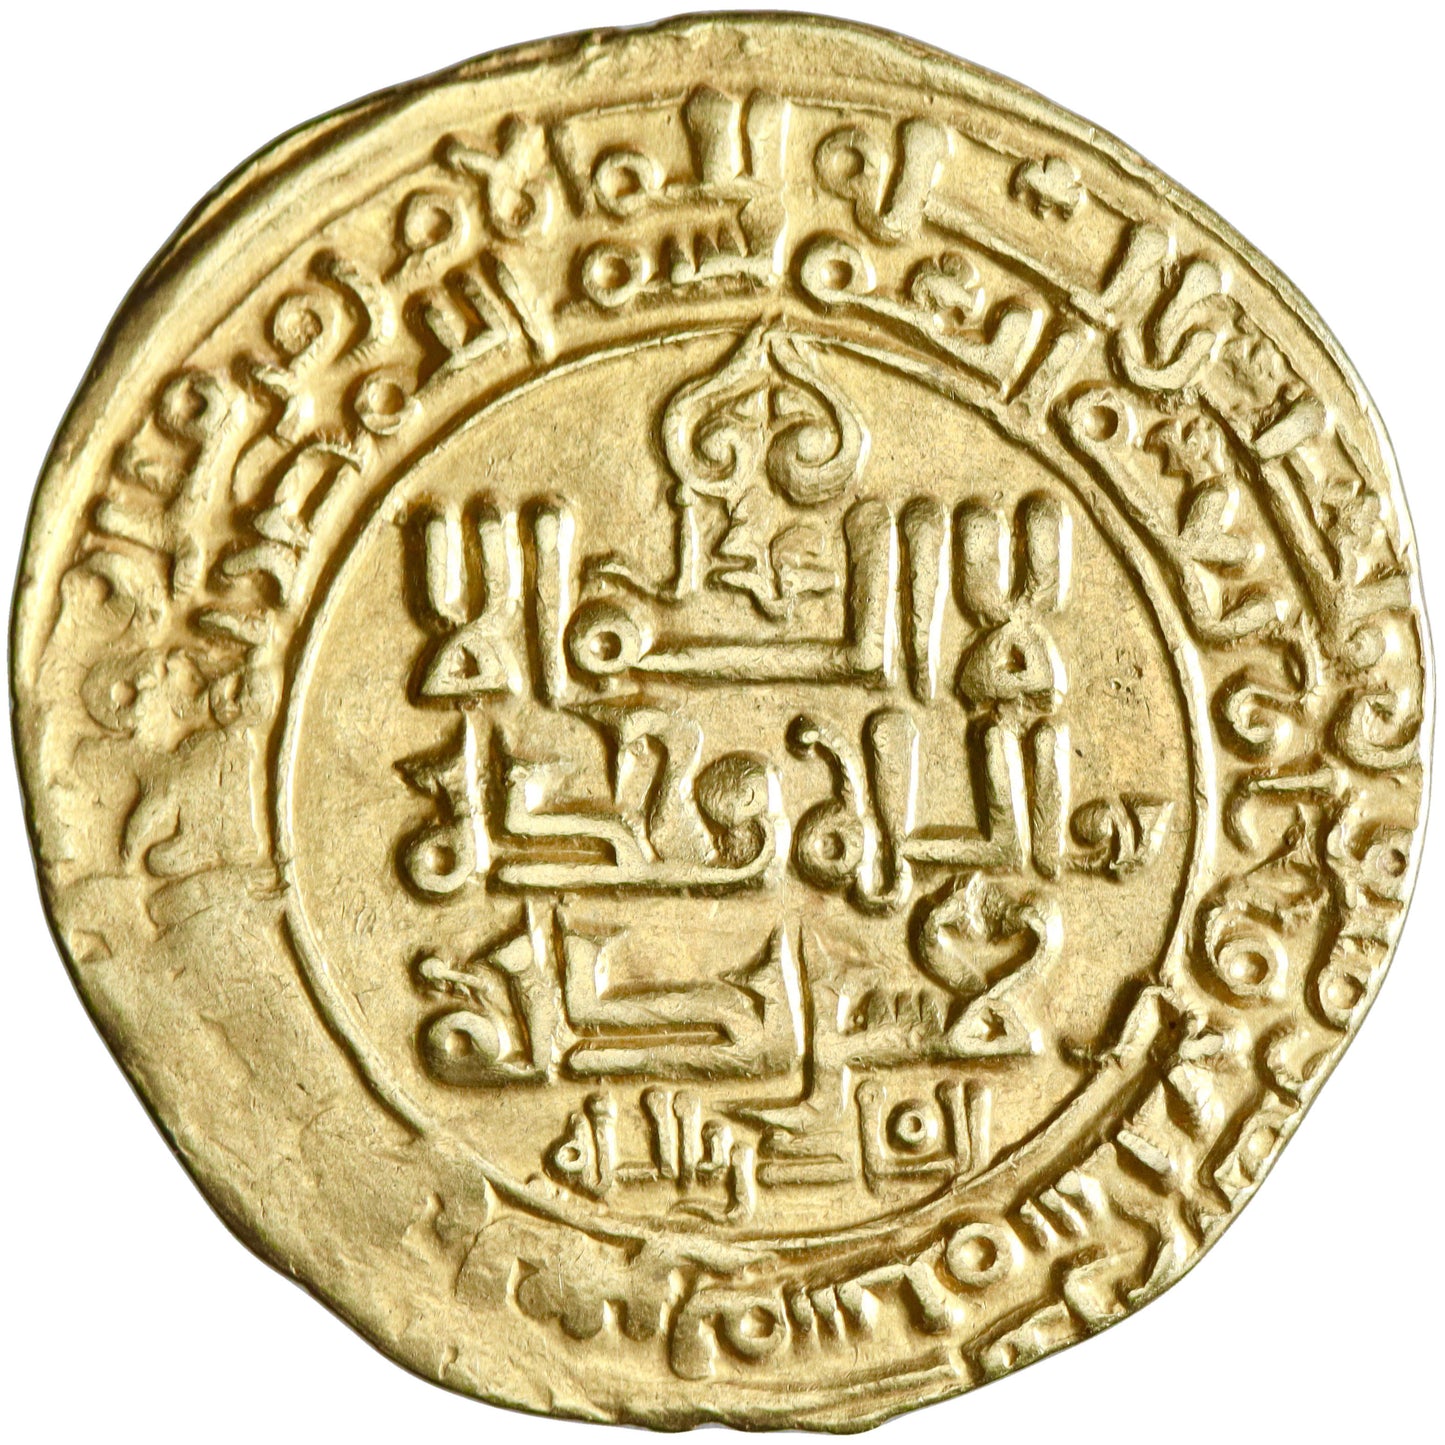 Ghaznavid, Mahmud ibn Sebuktegin, gold dinar, Ghazna mint, AH 407, citing al-Qadir